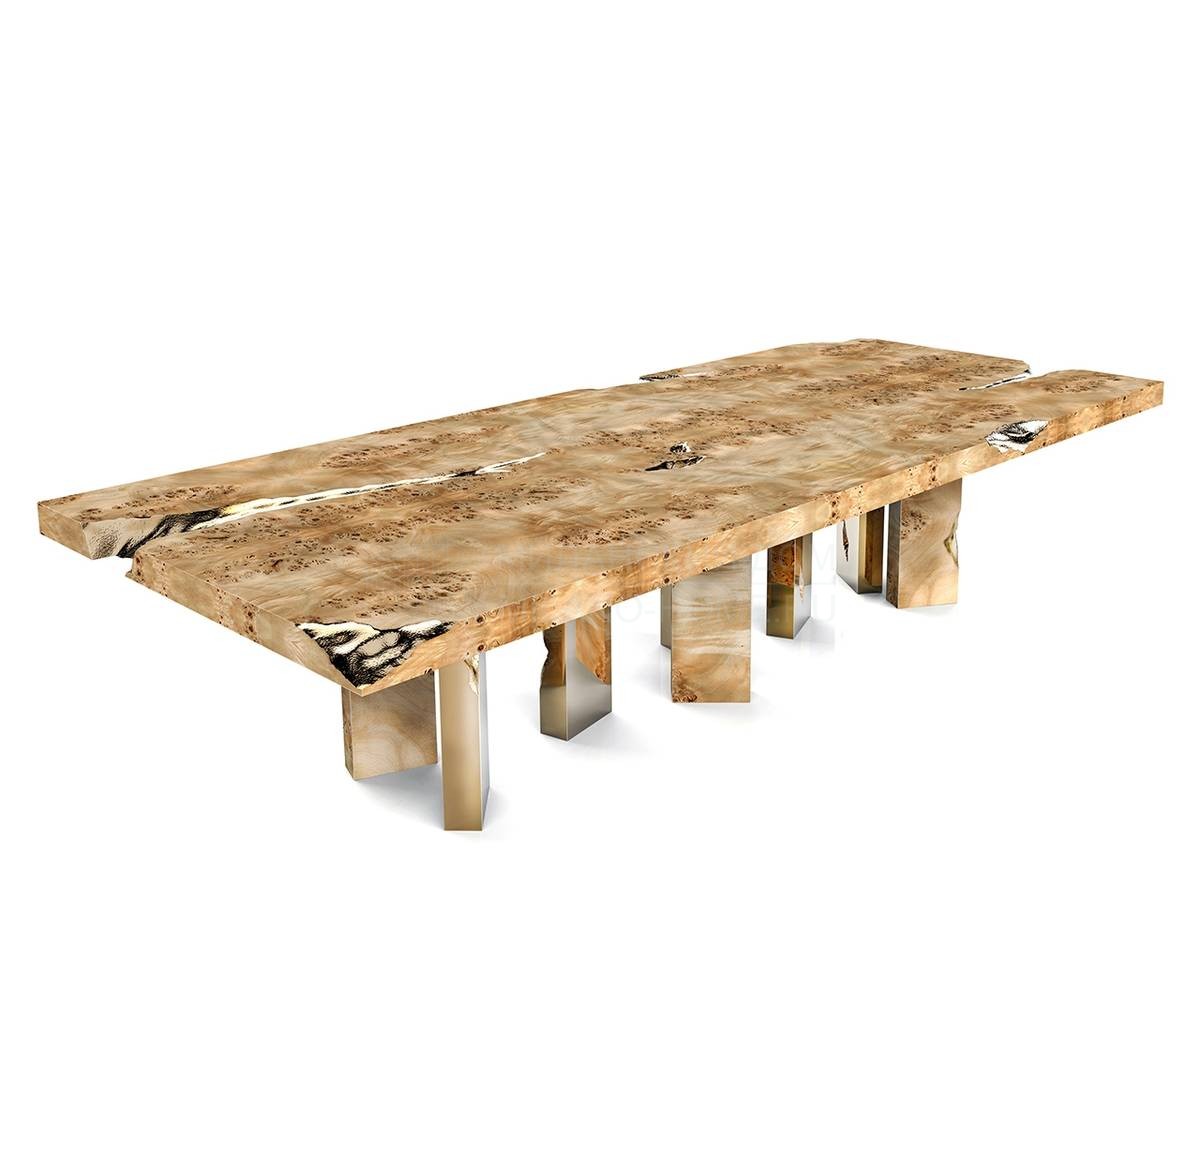 Обеденный стол Empire/table из Португалии фабрики BOCA DO LOBO